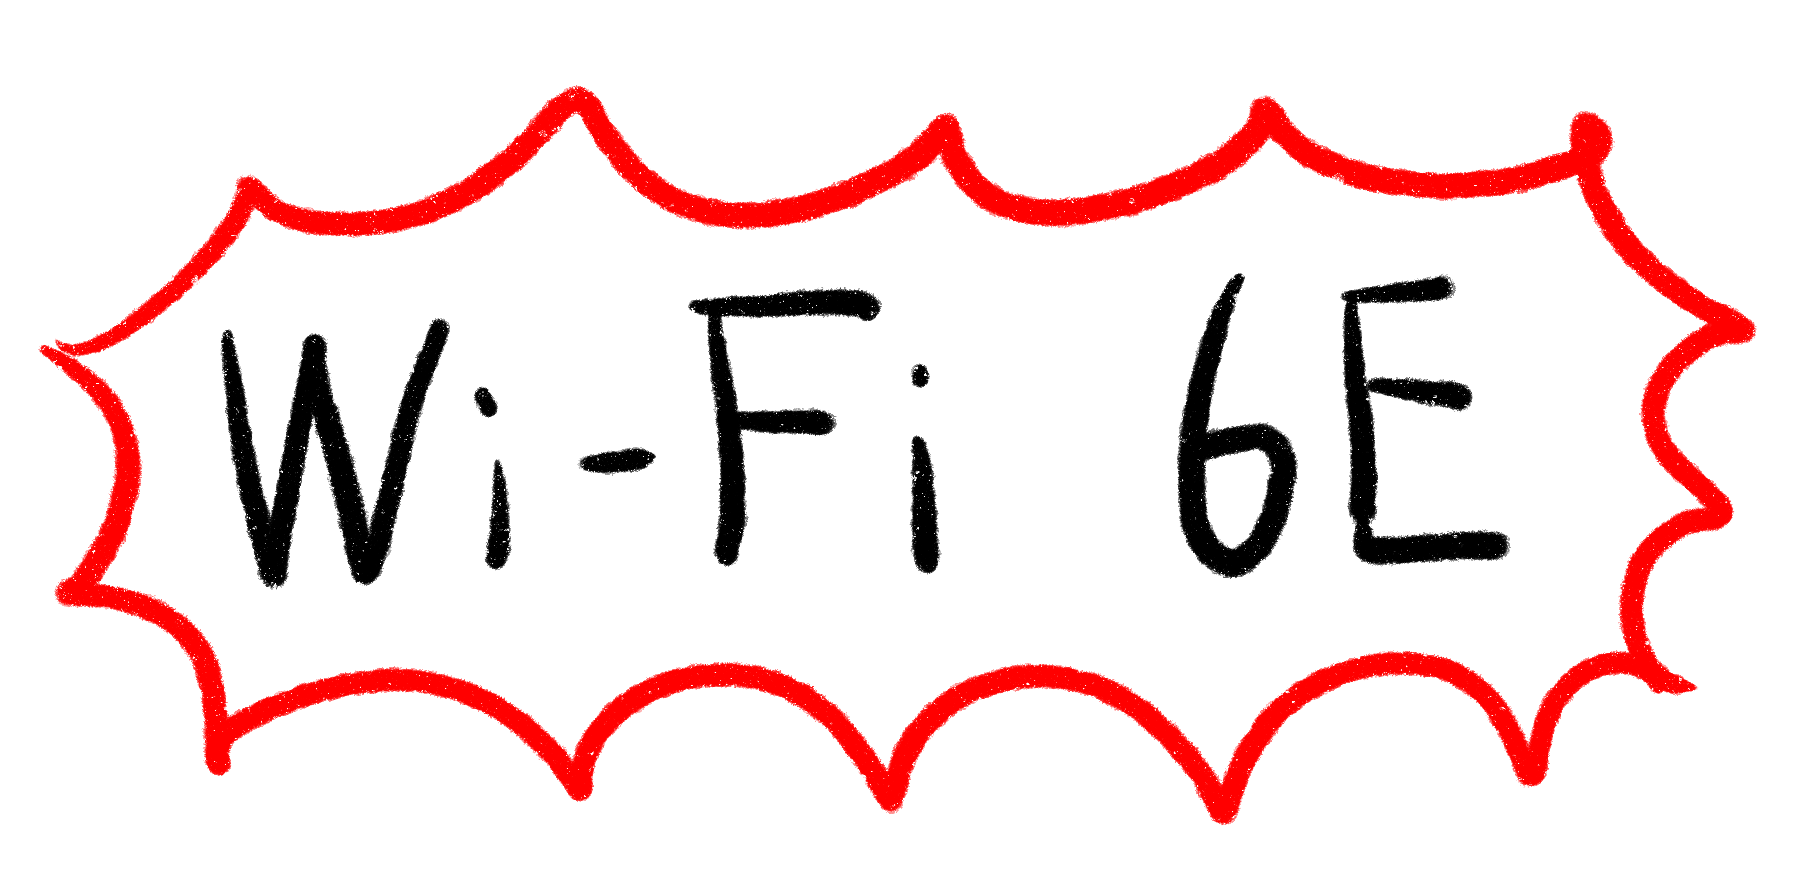 Wi-Fi6Eと書かれたフキダシ